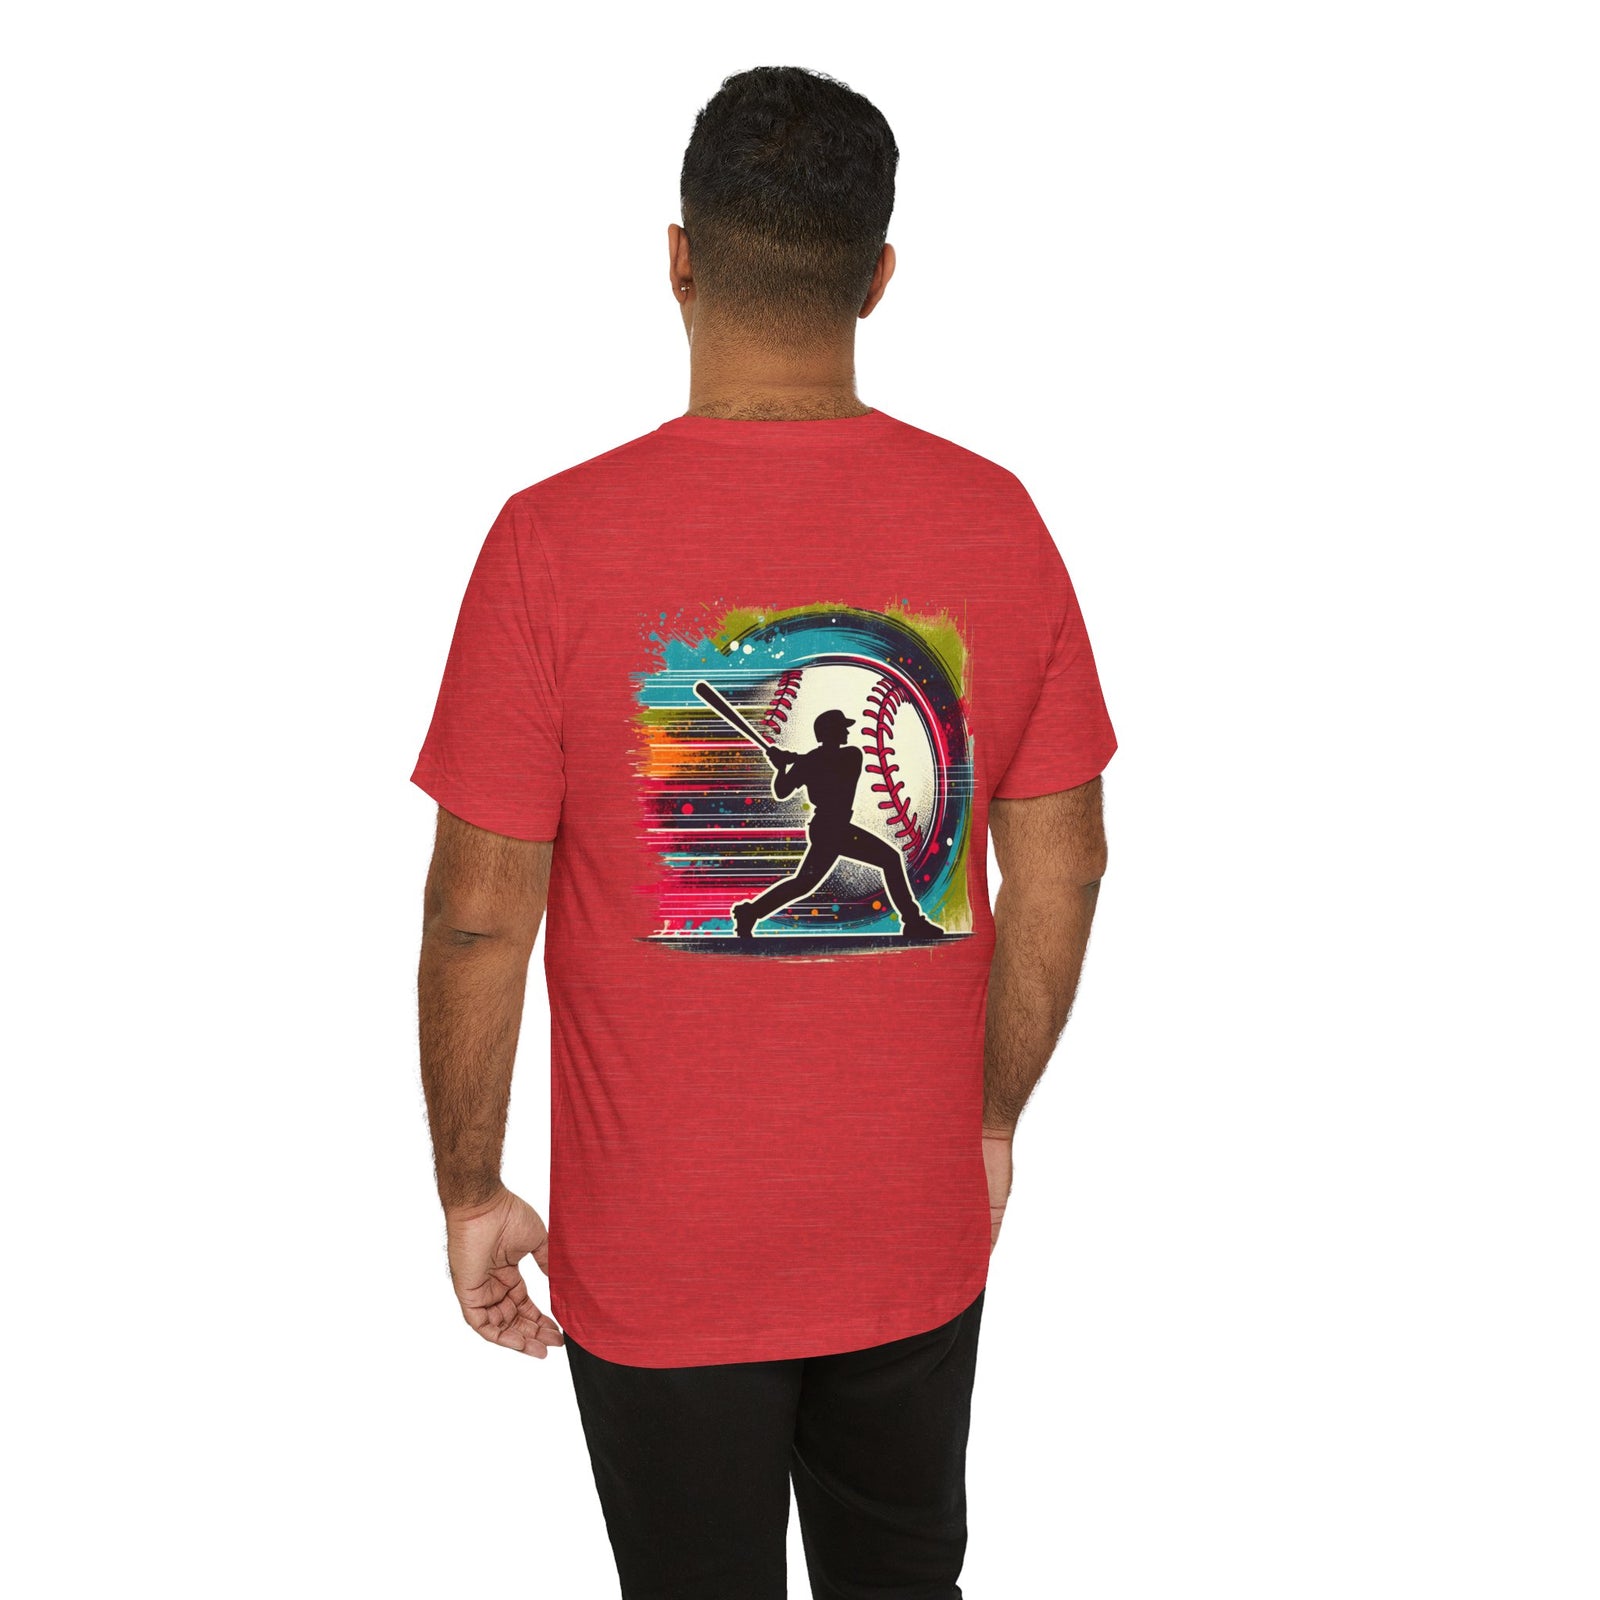 Spirit League Logo Back Print Baseball Shirt | Baseball Lover Gift | Unisex Jersey Short Sleeve Tee